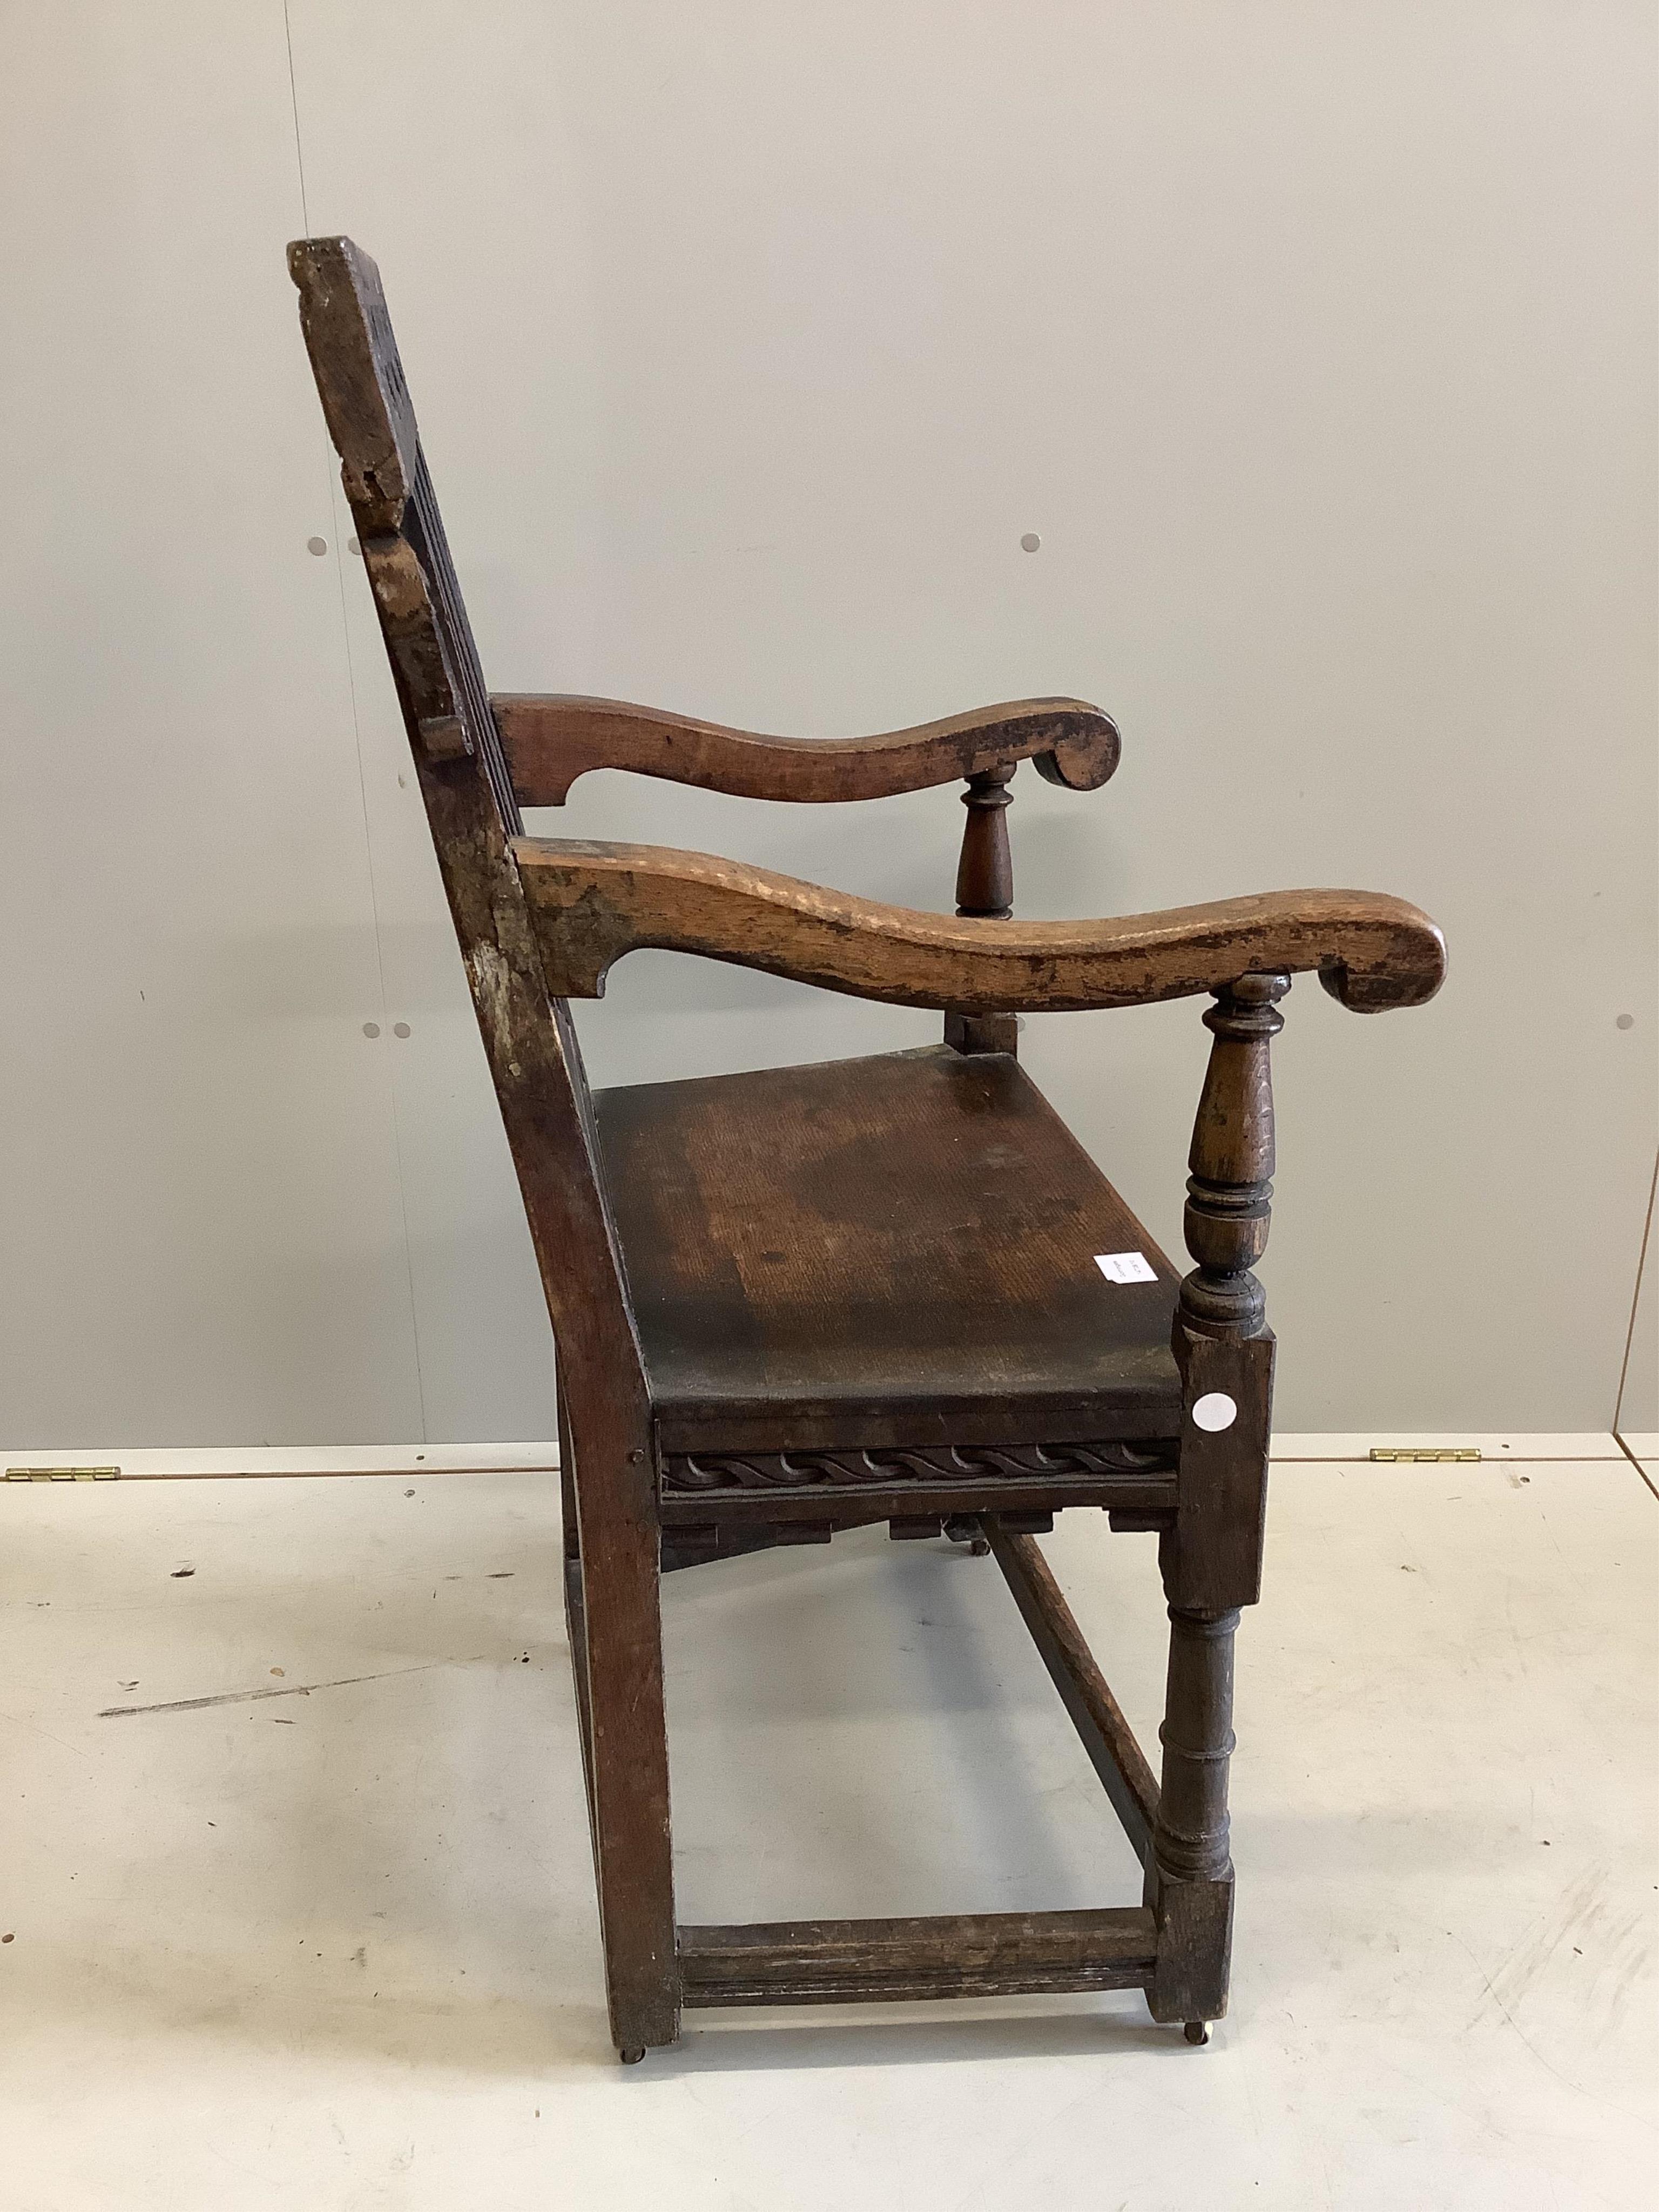 A 17th century oak wainscot type chair, width 61cm, depth 49cm, height 110cm. Condition - fair